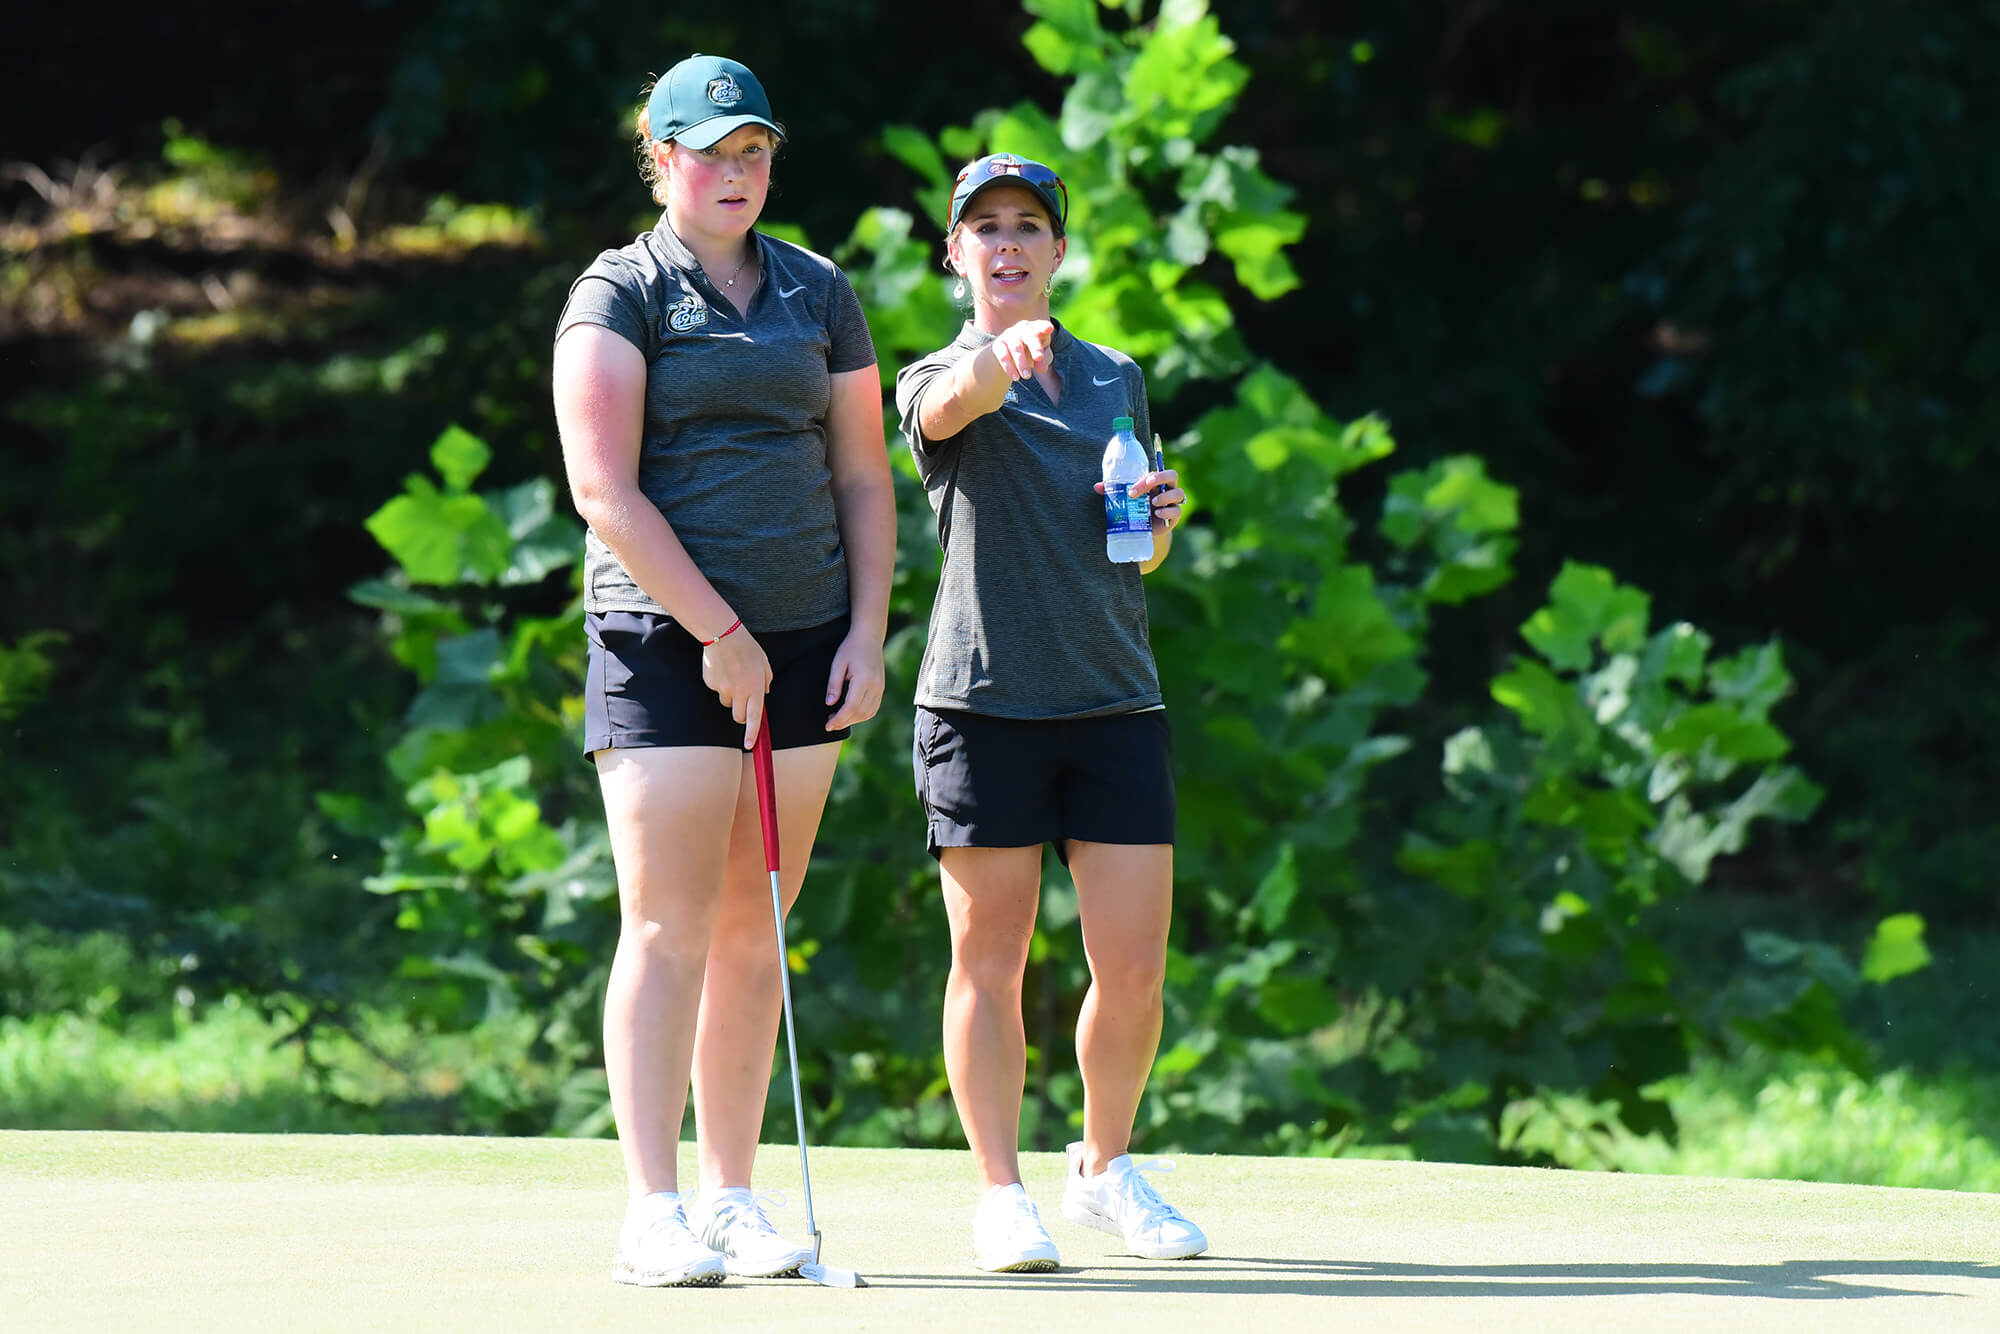 Holly Clark, head coach of UNC Charlotte's Women’s Golf